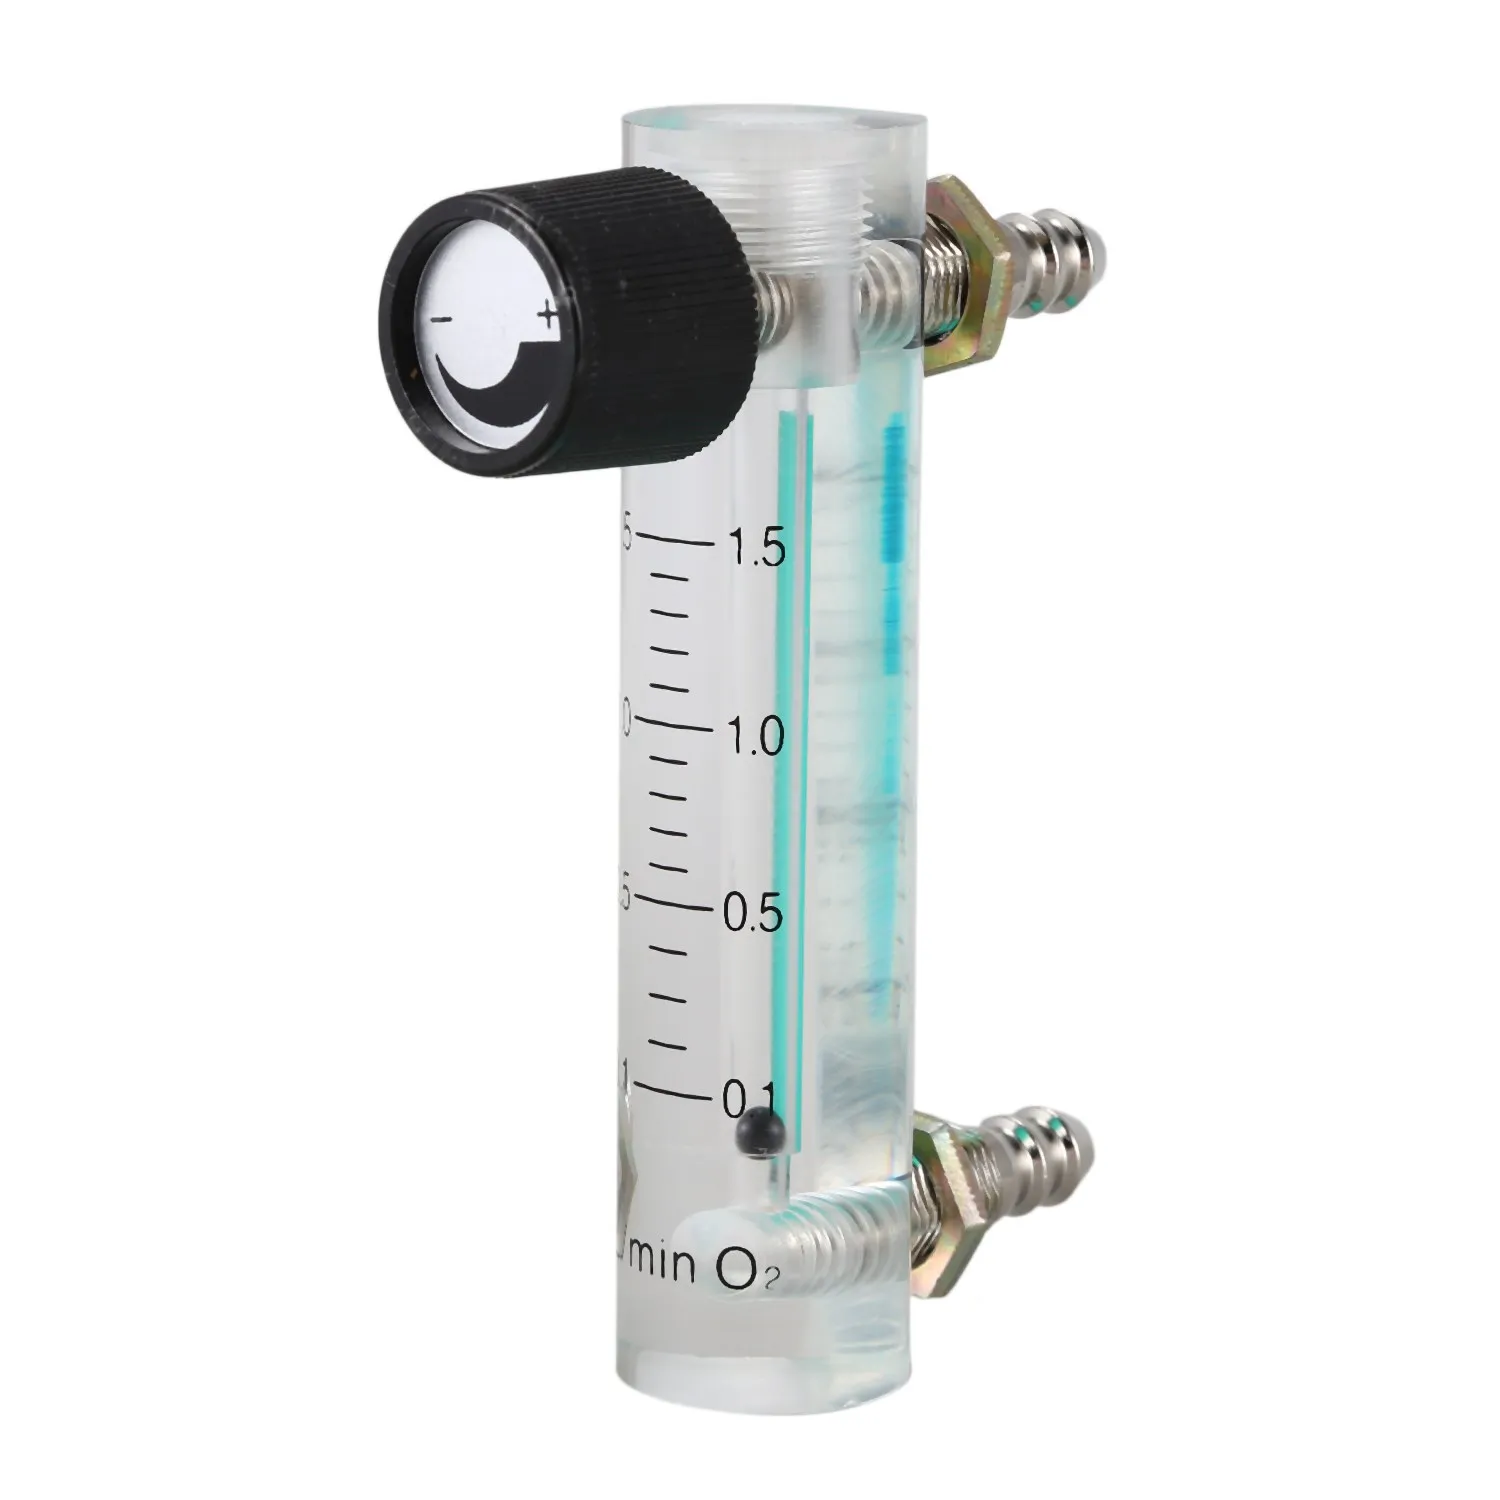 

0.1-1.5LPM 1.5L Oxygen Flow Meter Flowmeter with Control Valve for Oxygen Air Gas